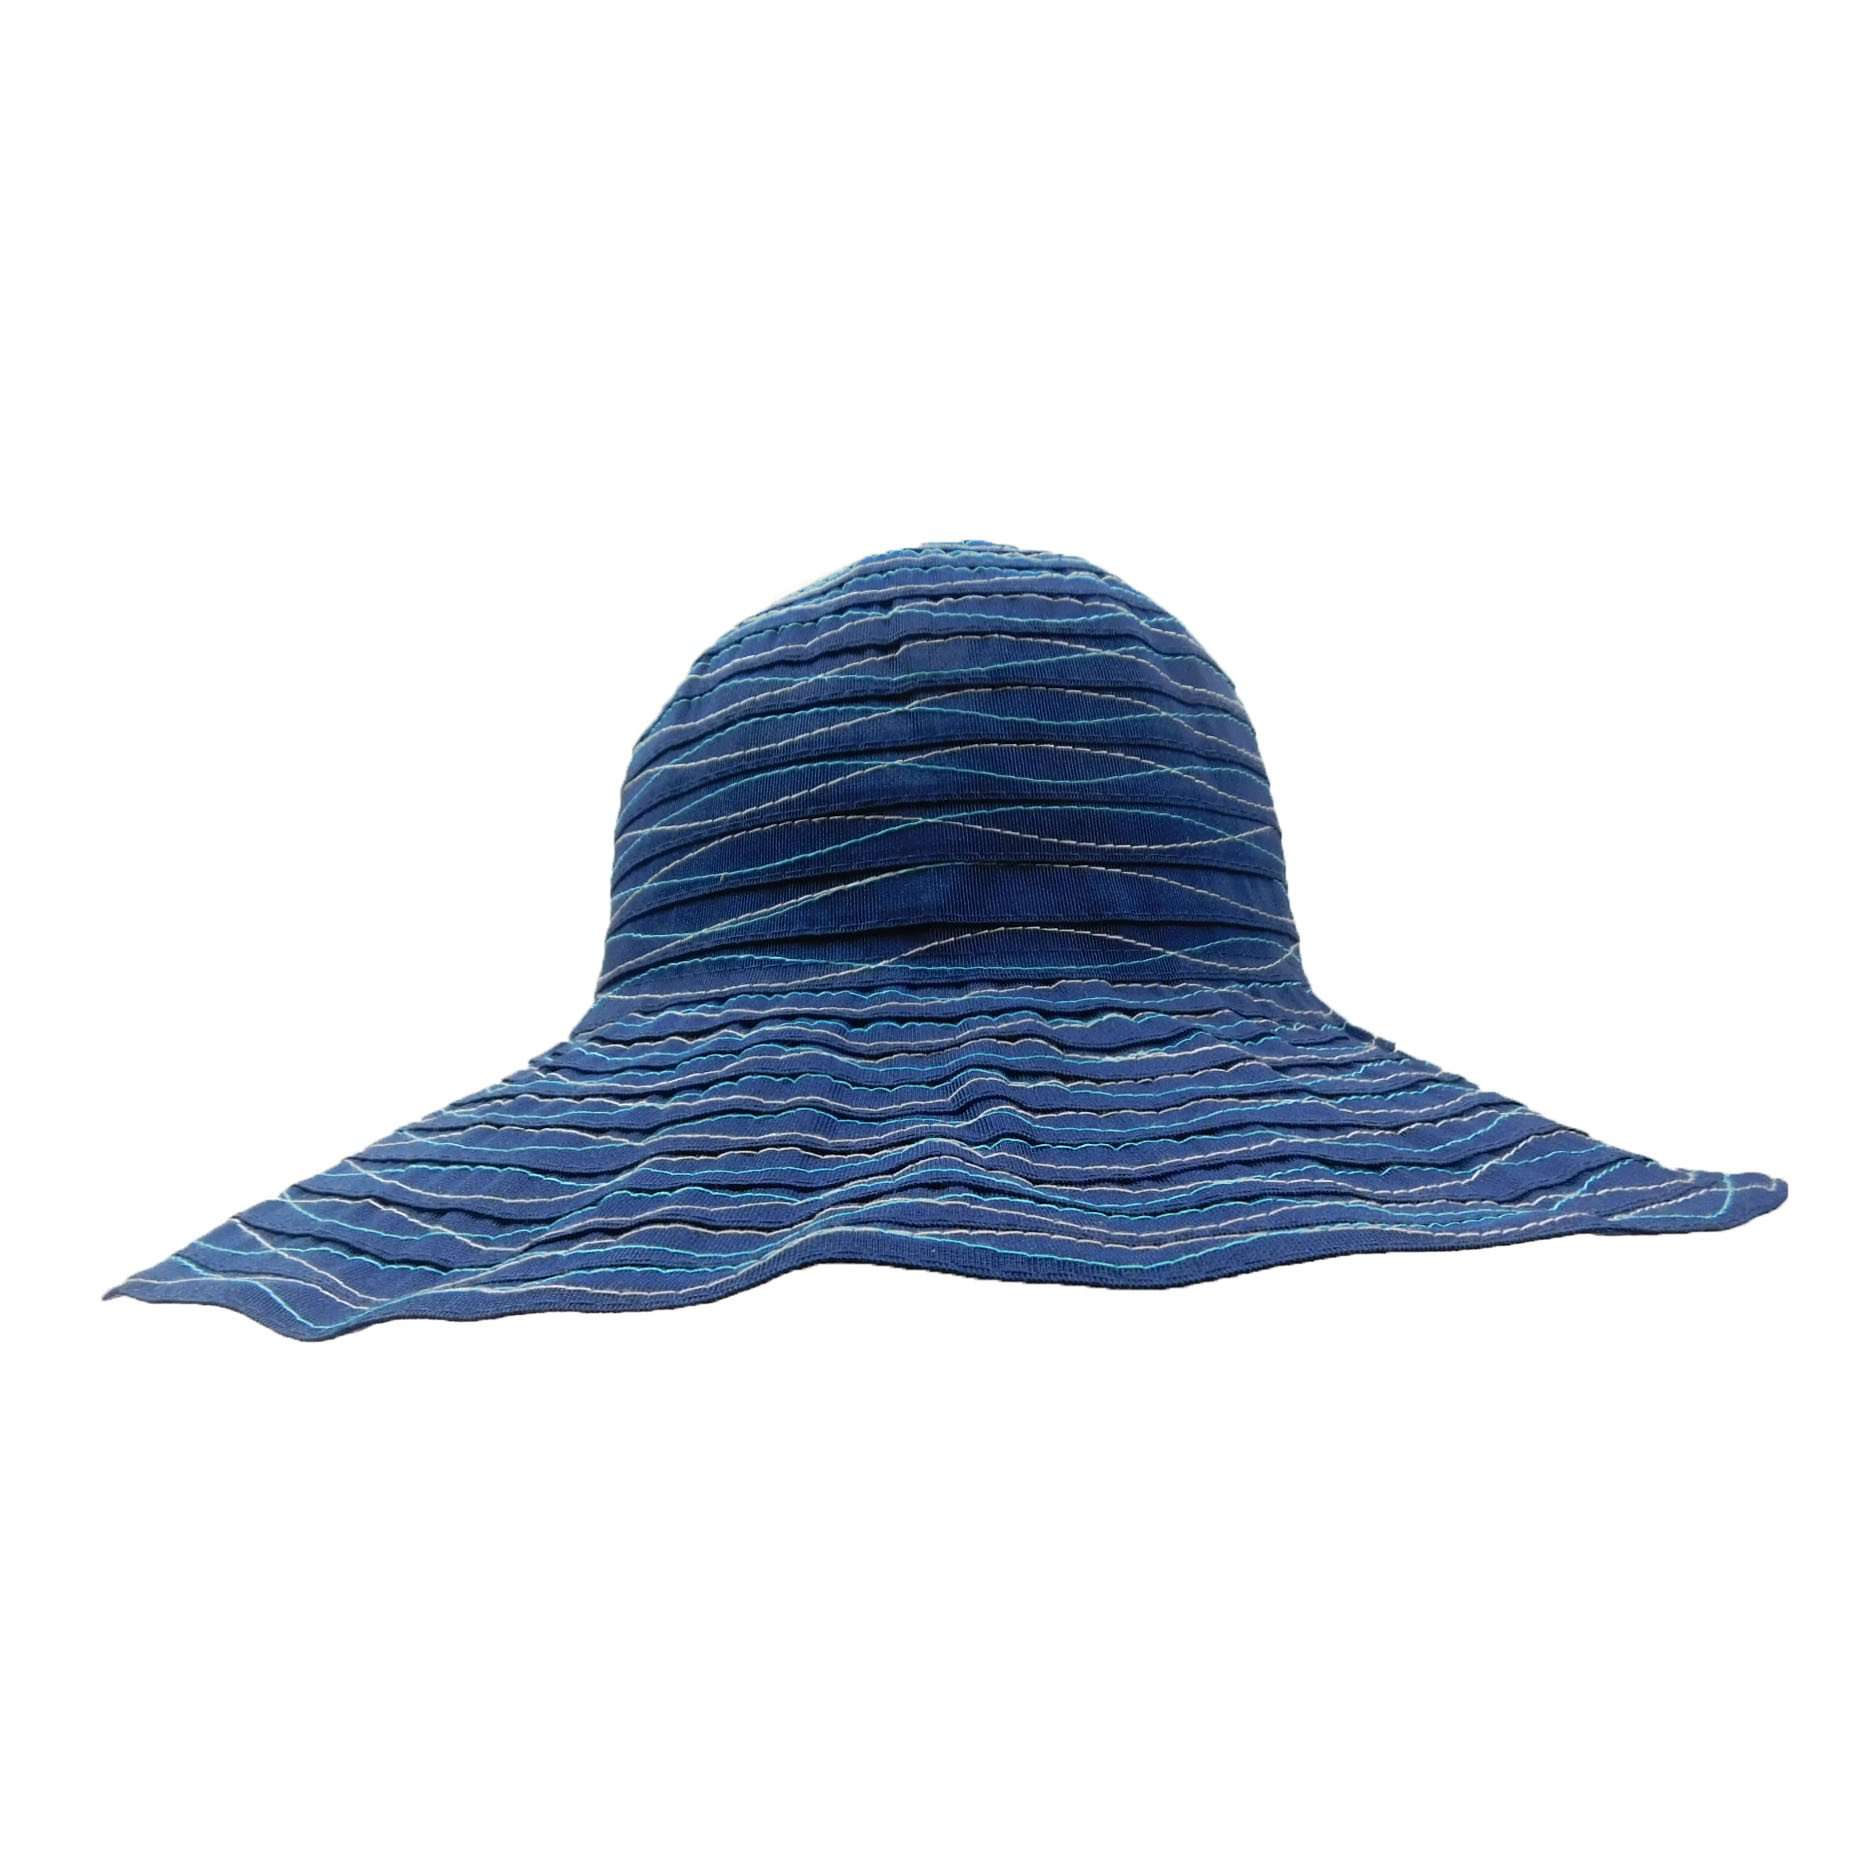 Shapeable Ribbon Floppy with Wavy Stitching, Floppy Hat - SetarTrading Hats 